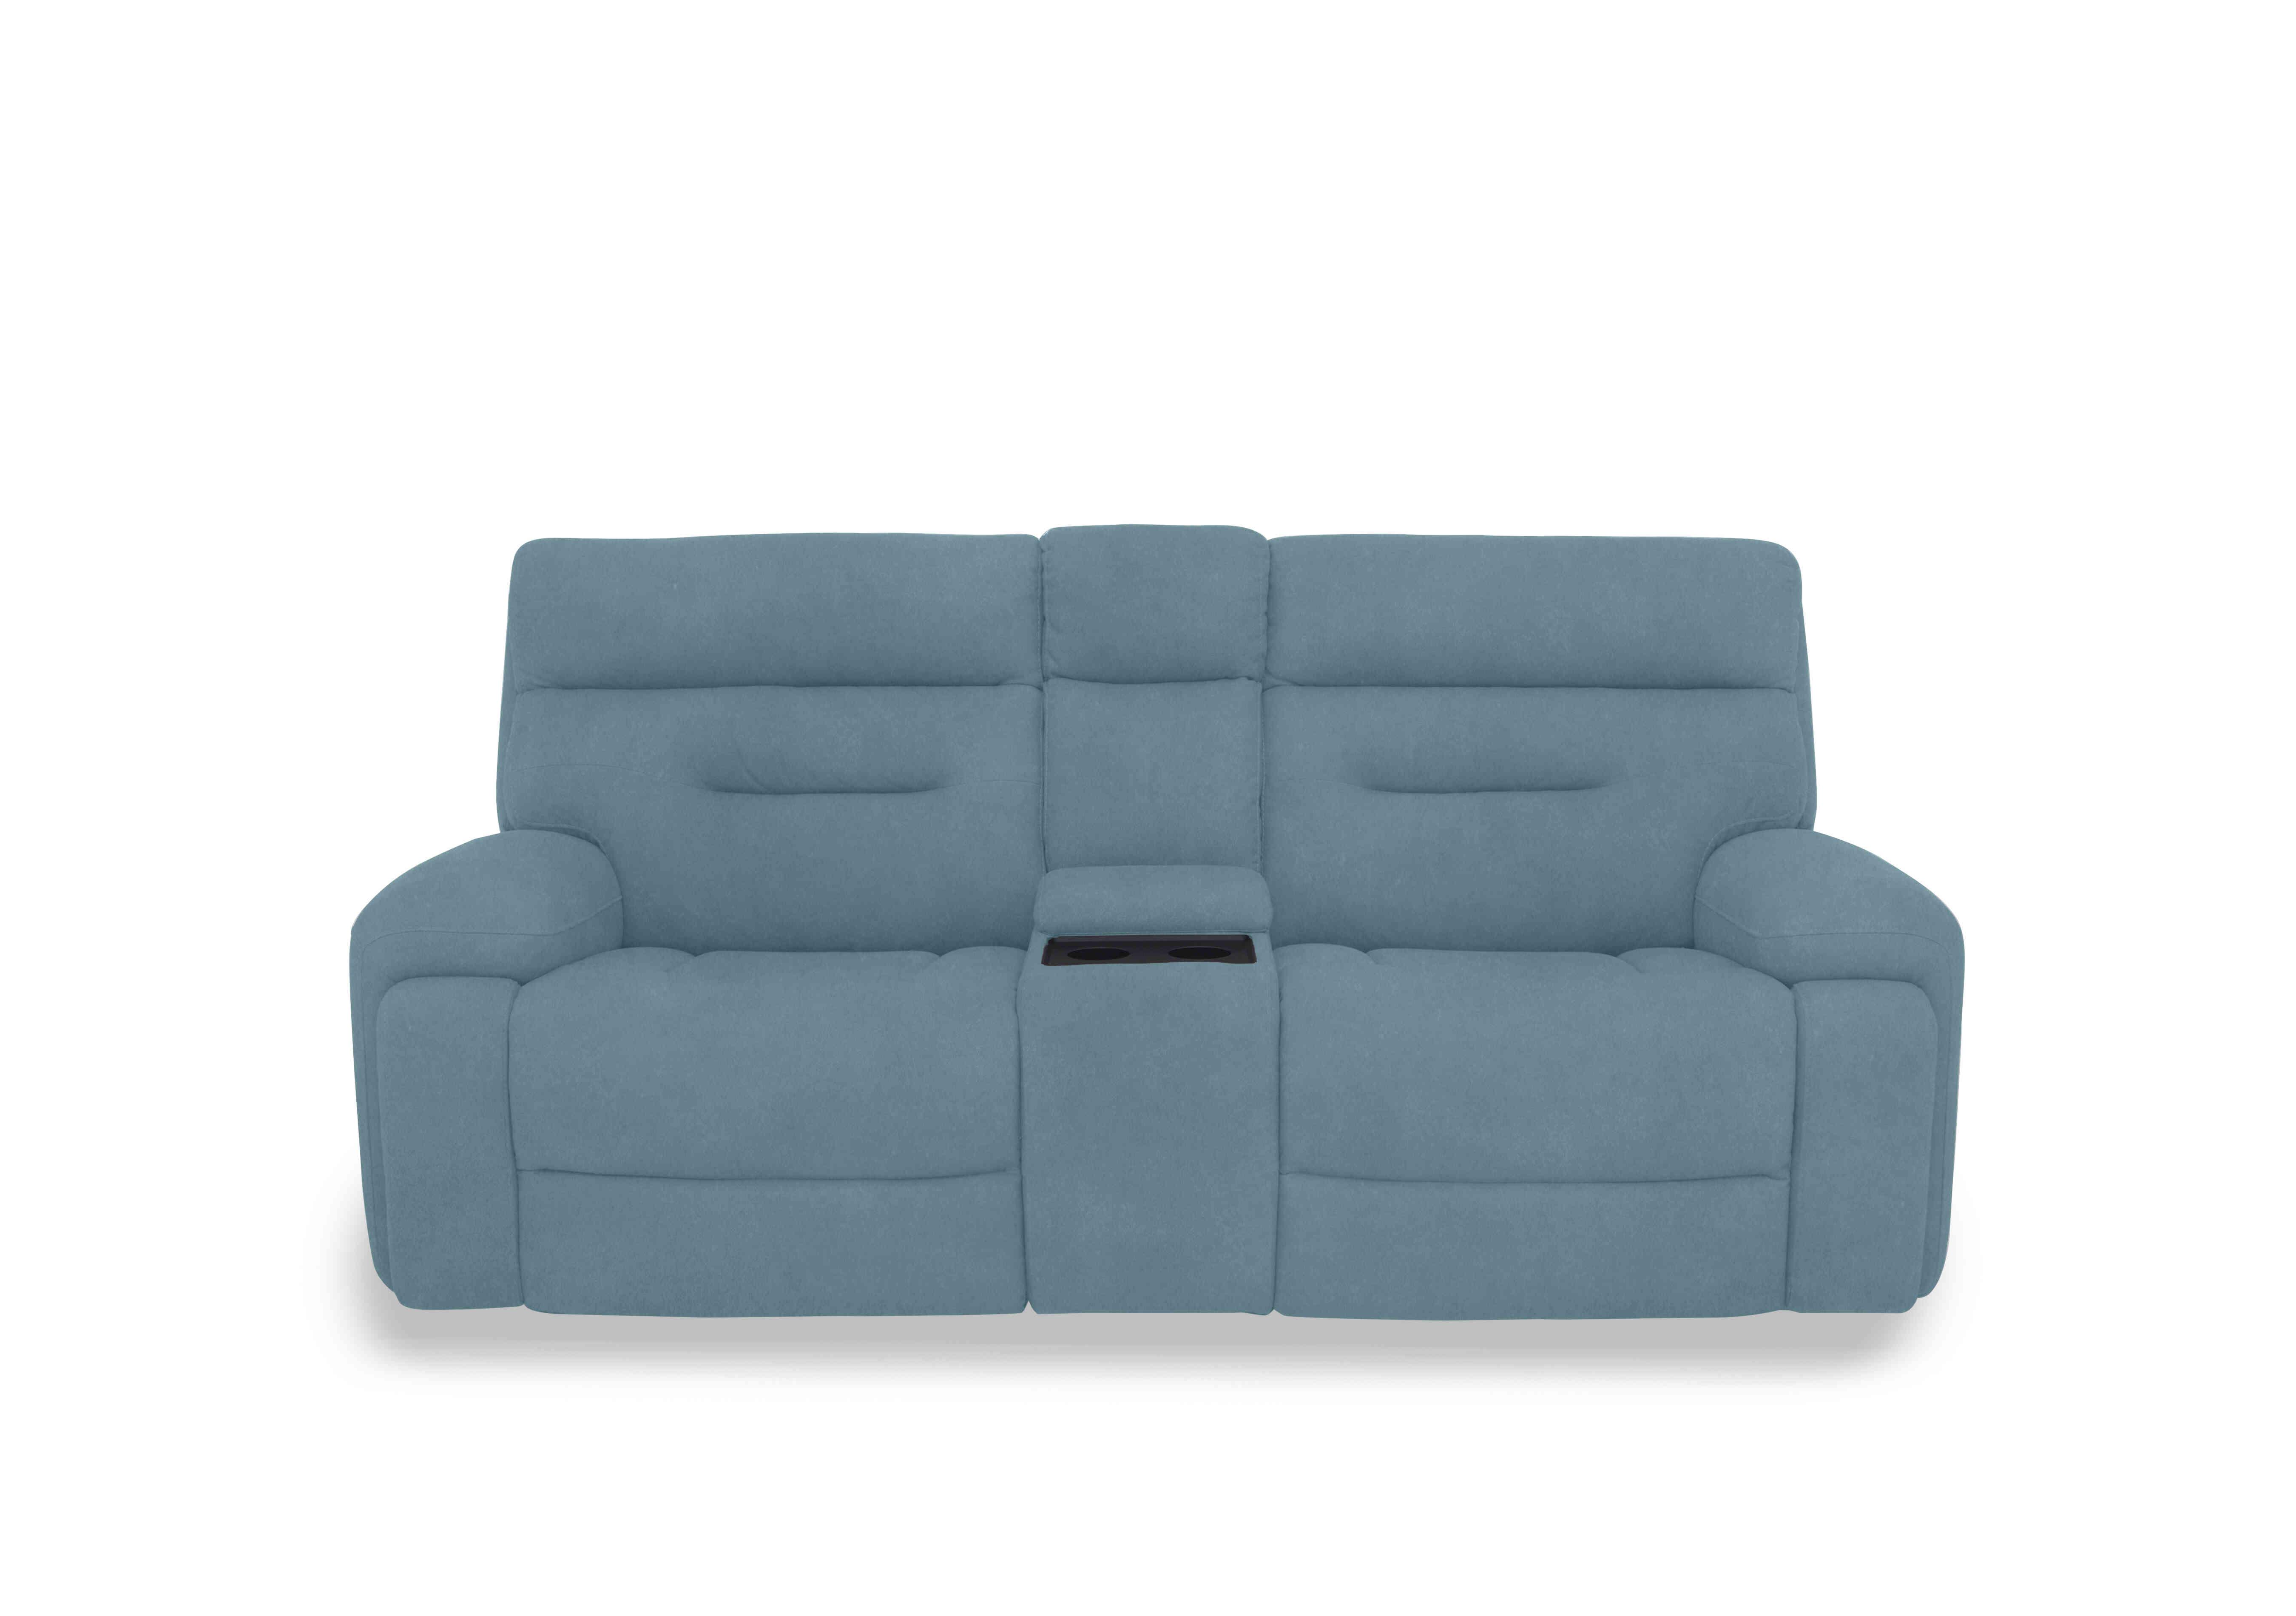 Cinemax Media 3 Seater Fabric Power Recliner Sofa with Power Headrests in Vv-0312 Velvet Blu on Furniture Village